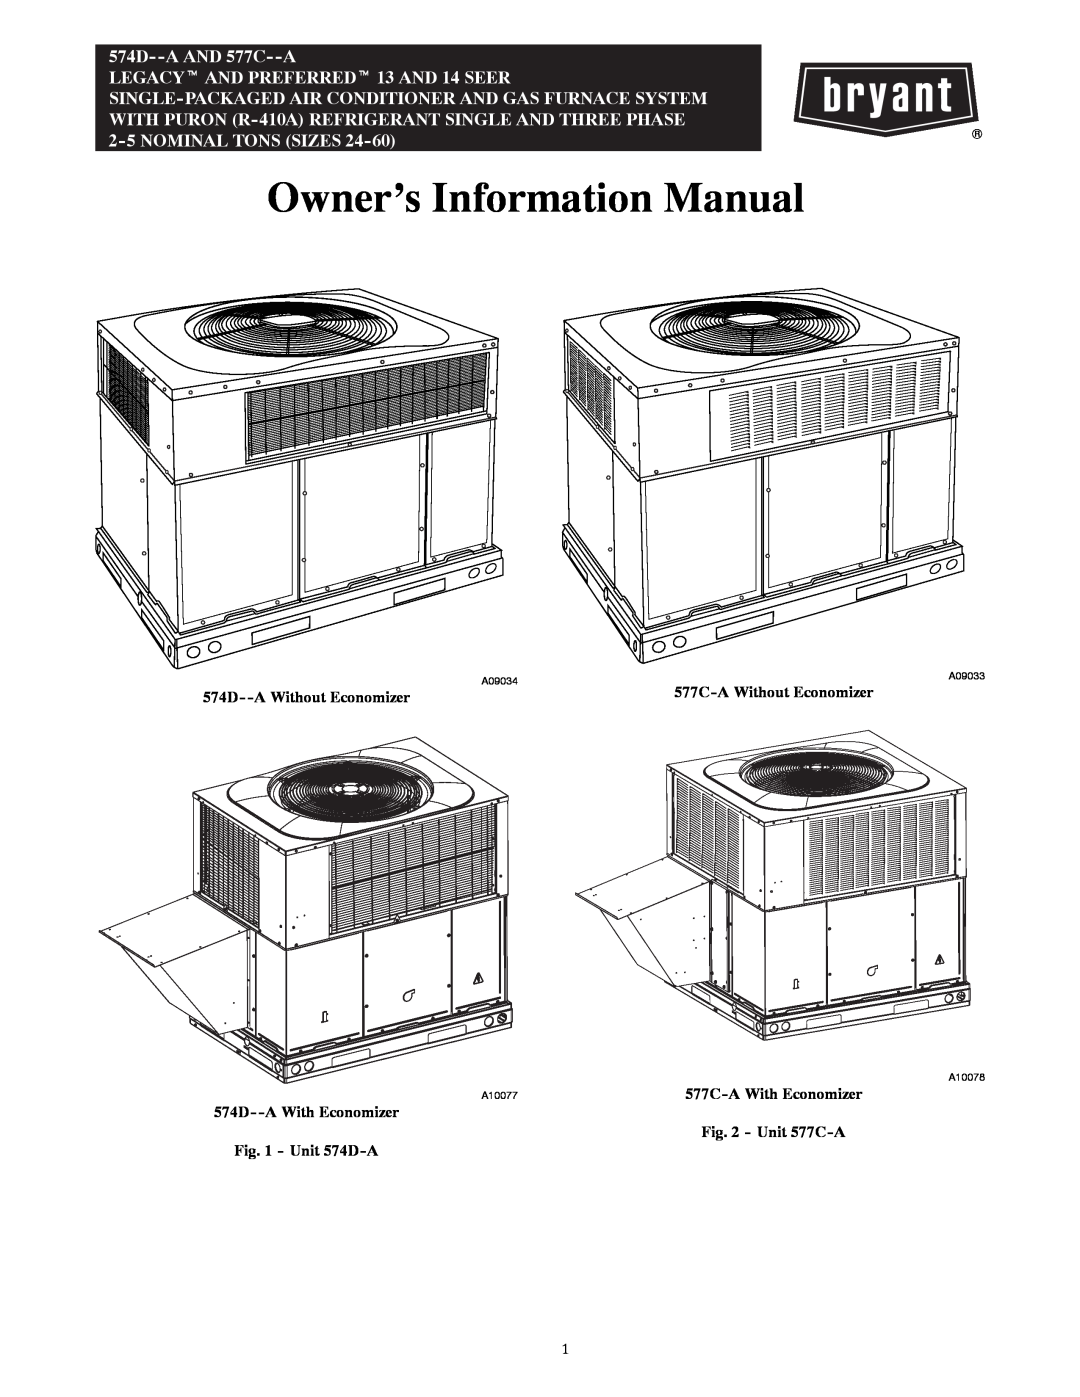 Bryant manual Owner’s Information Manual, 574D--AAND 577C--A, 577C-AWithout Economizer, 574D--AWithout Economizer 